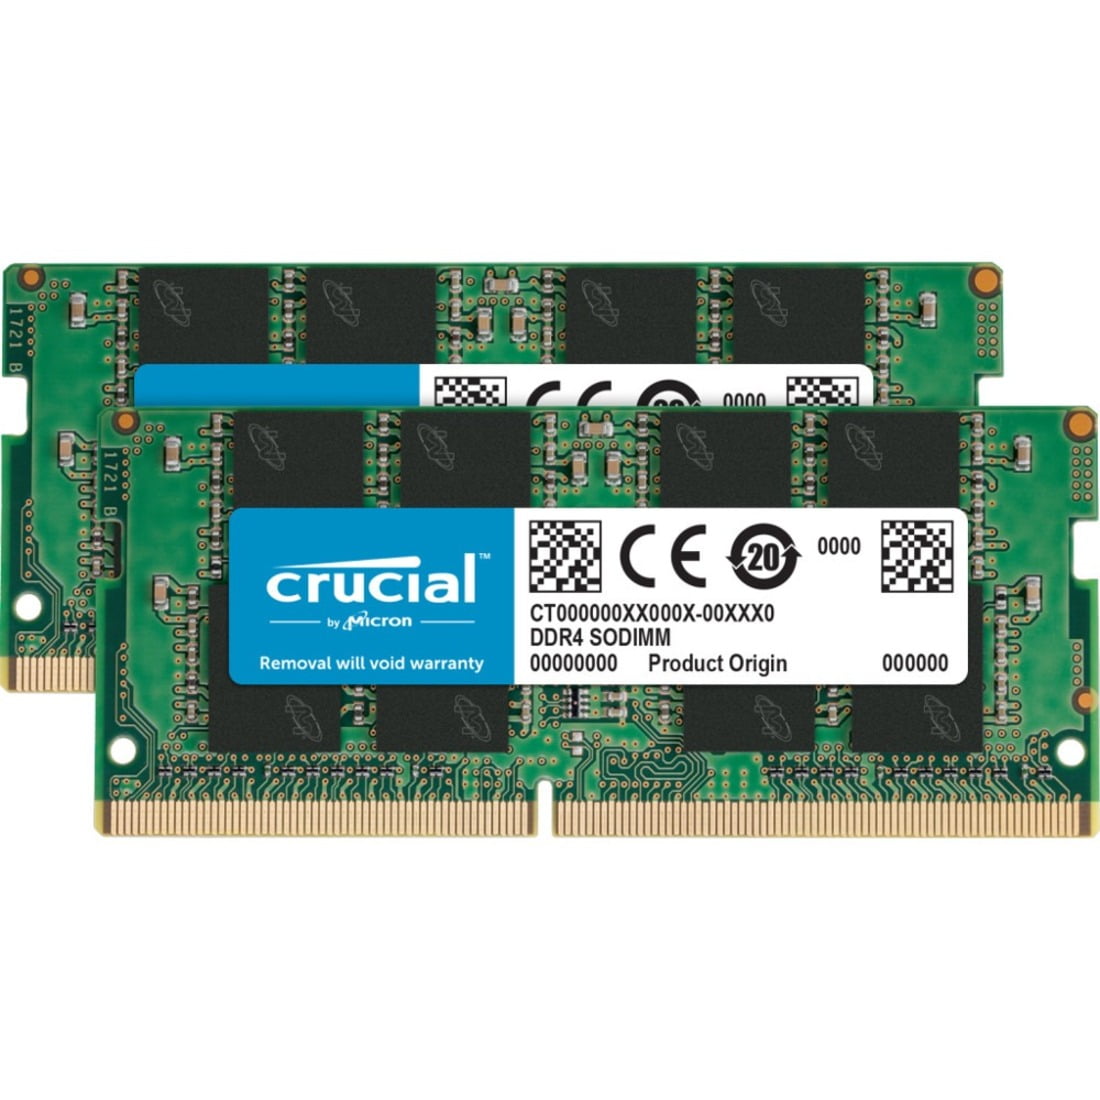 DATARAM 4GB DDR4 PC4-2400 SO DIMM Memory RAM Compatible with Lenovo THINKPAD T470P